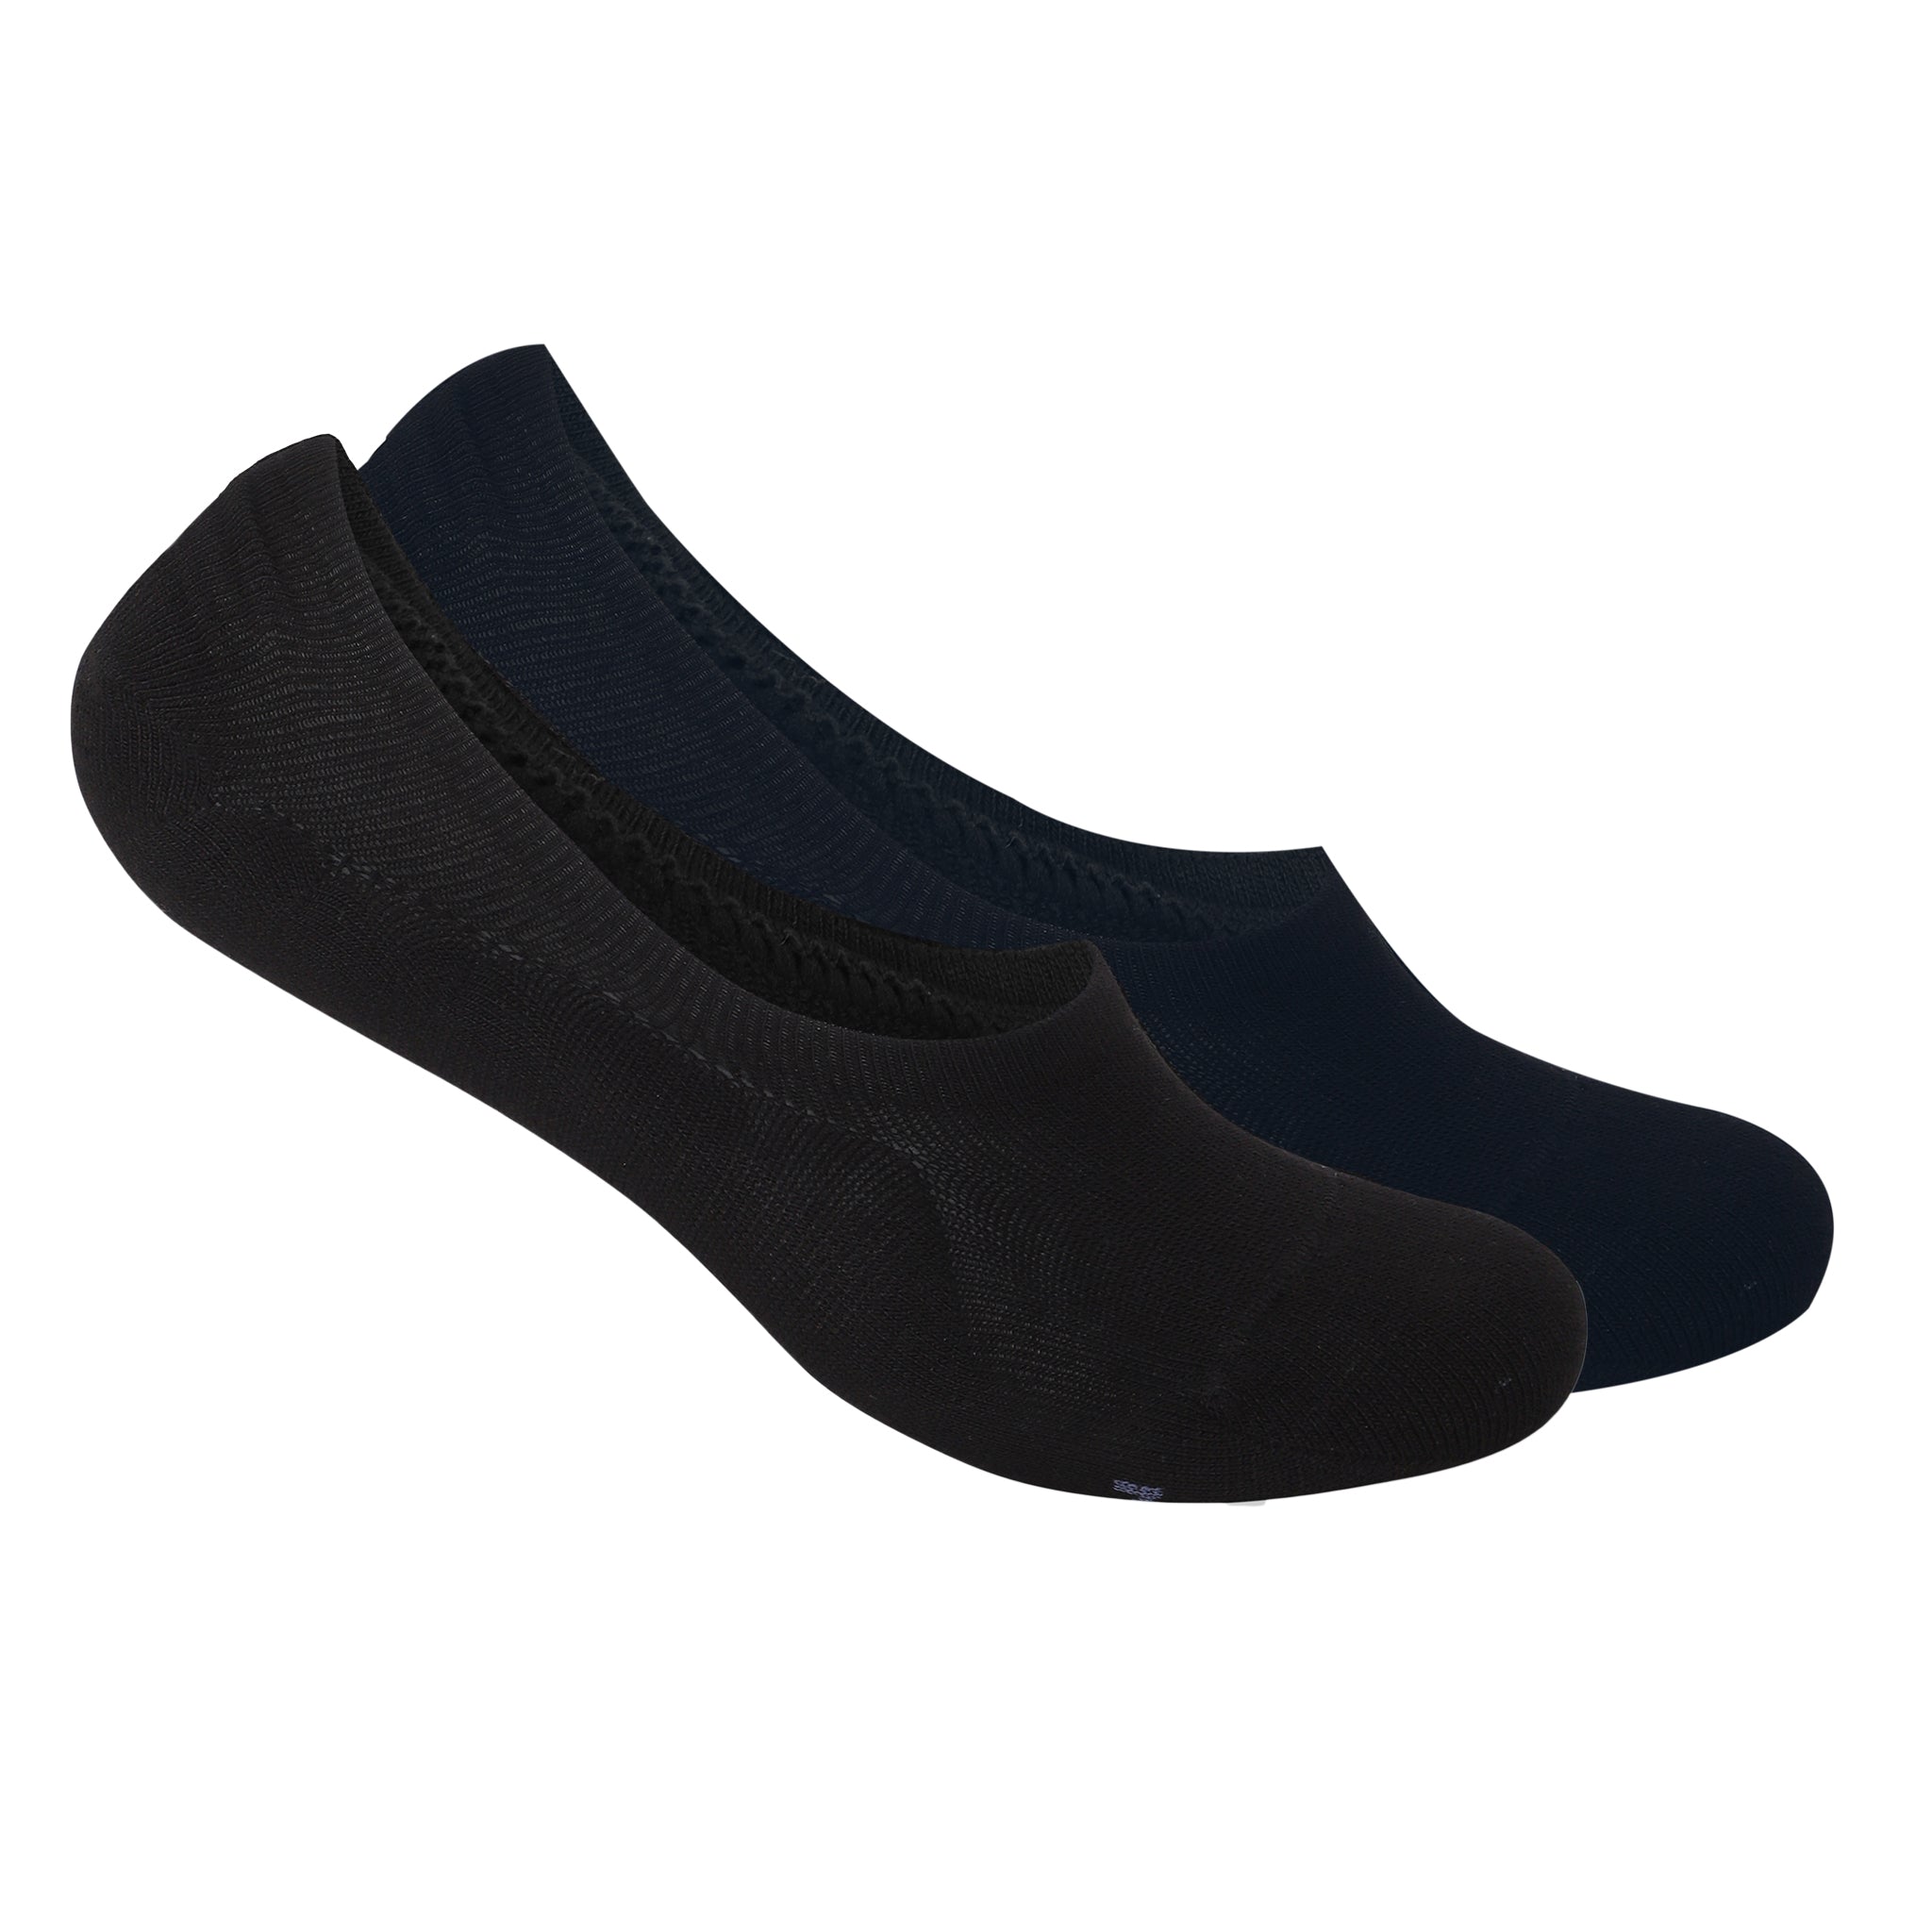 Combo of 2 - Navy Blue & Black No Show Socks